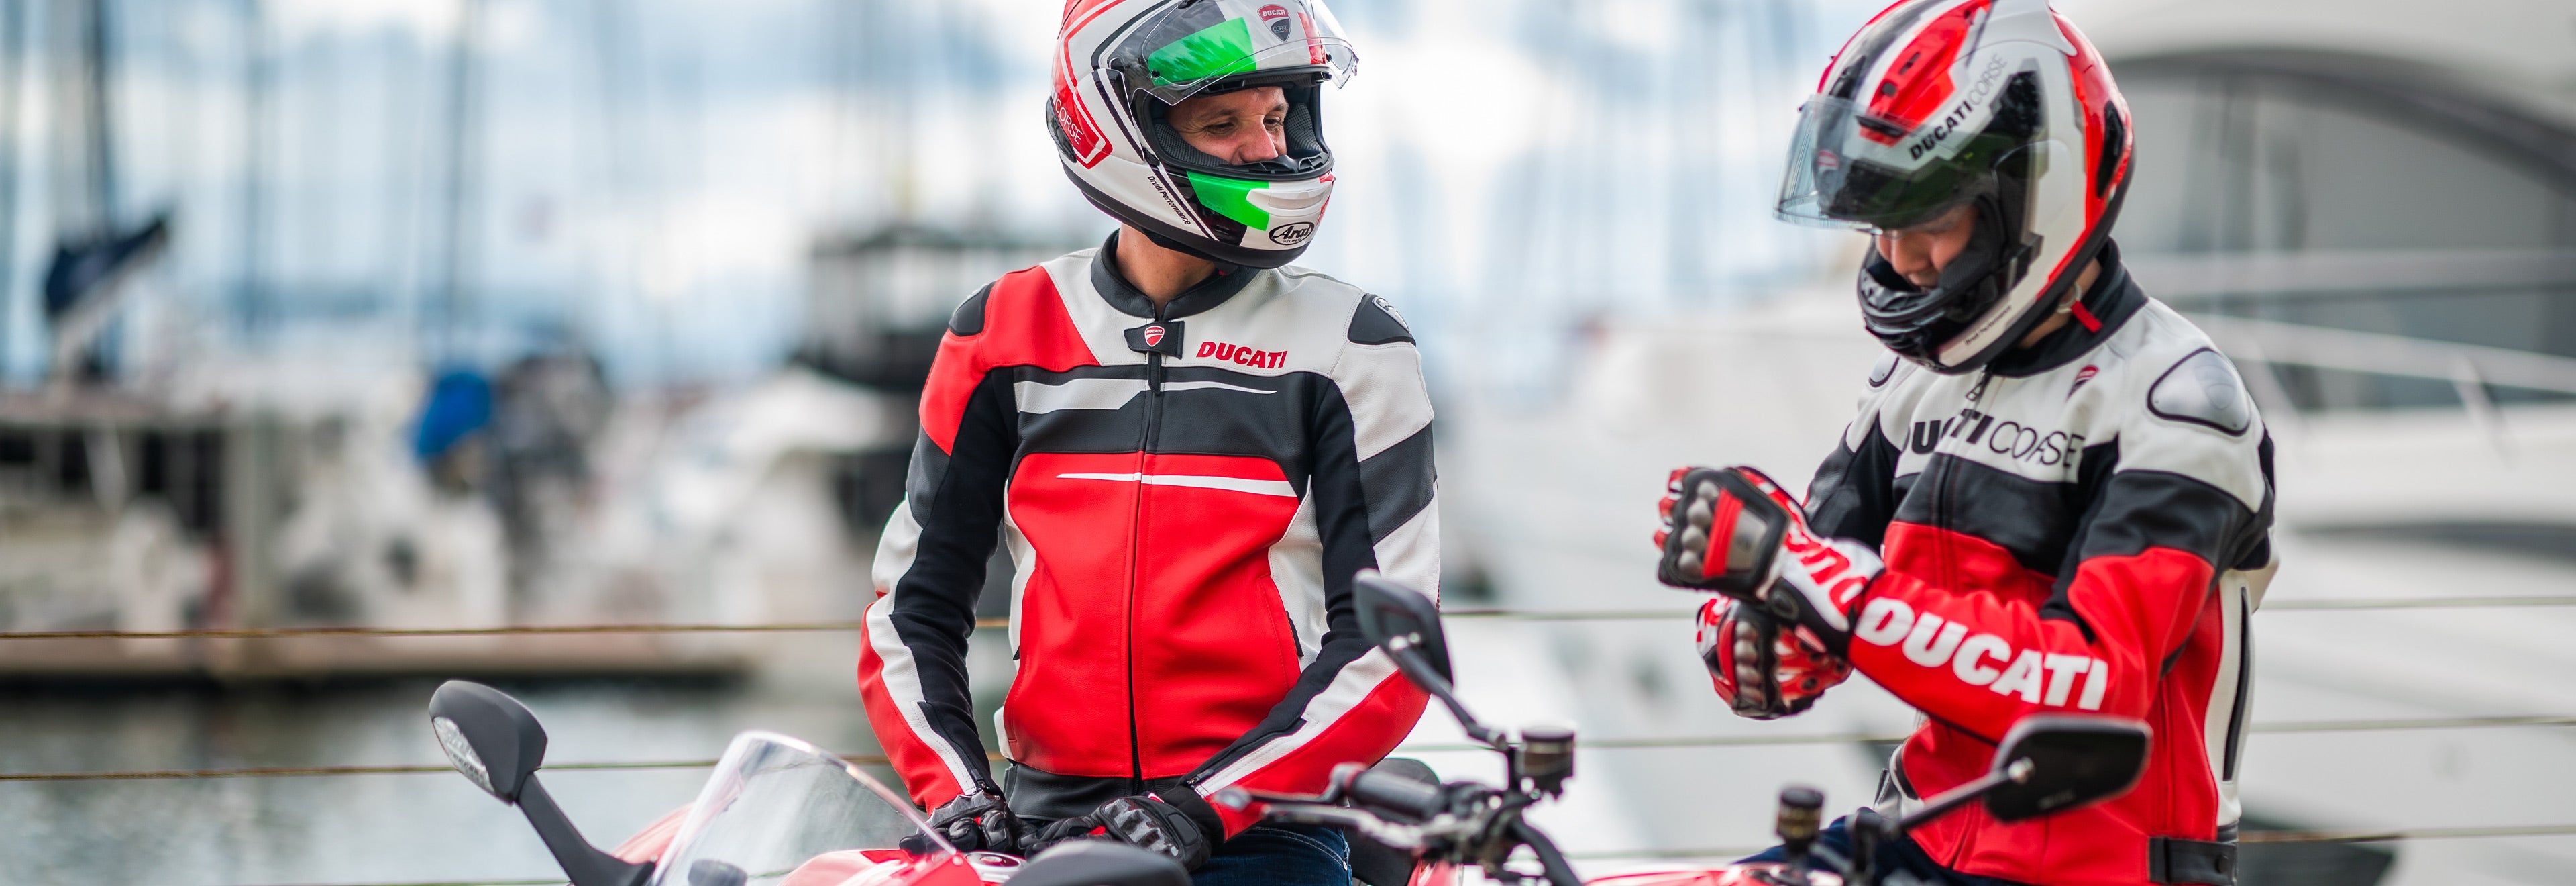 fange i dag bad Buy Motorcycle Leather Jackets Online - Ducati Sydney